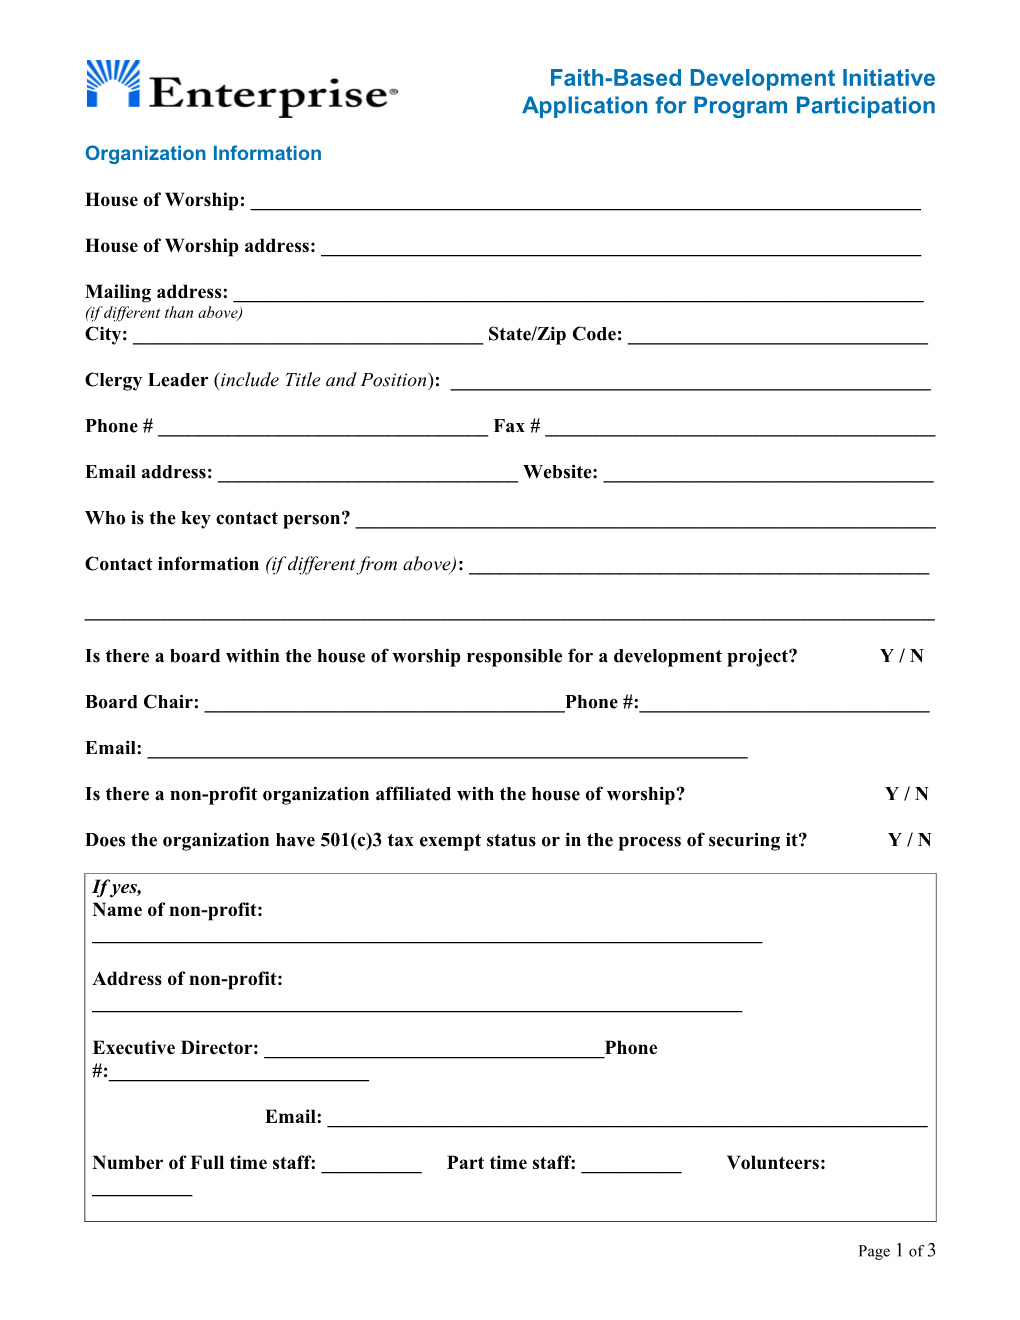 Application for Program Participation